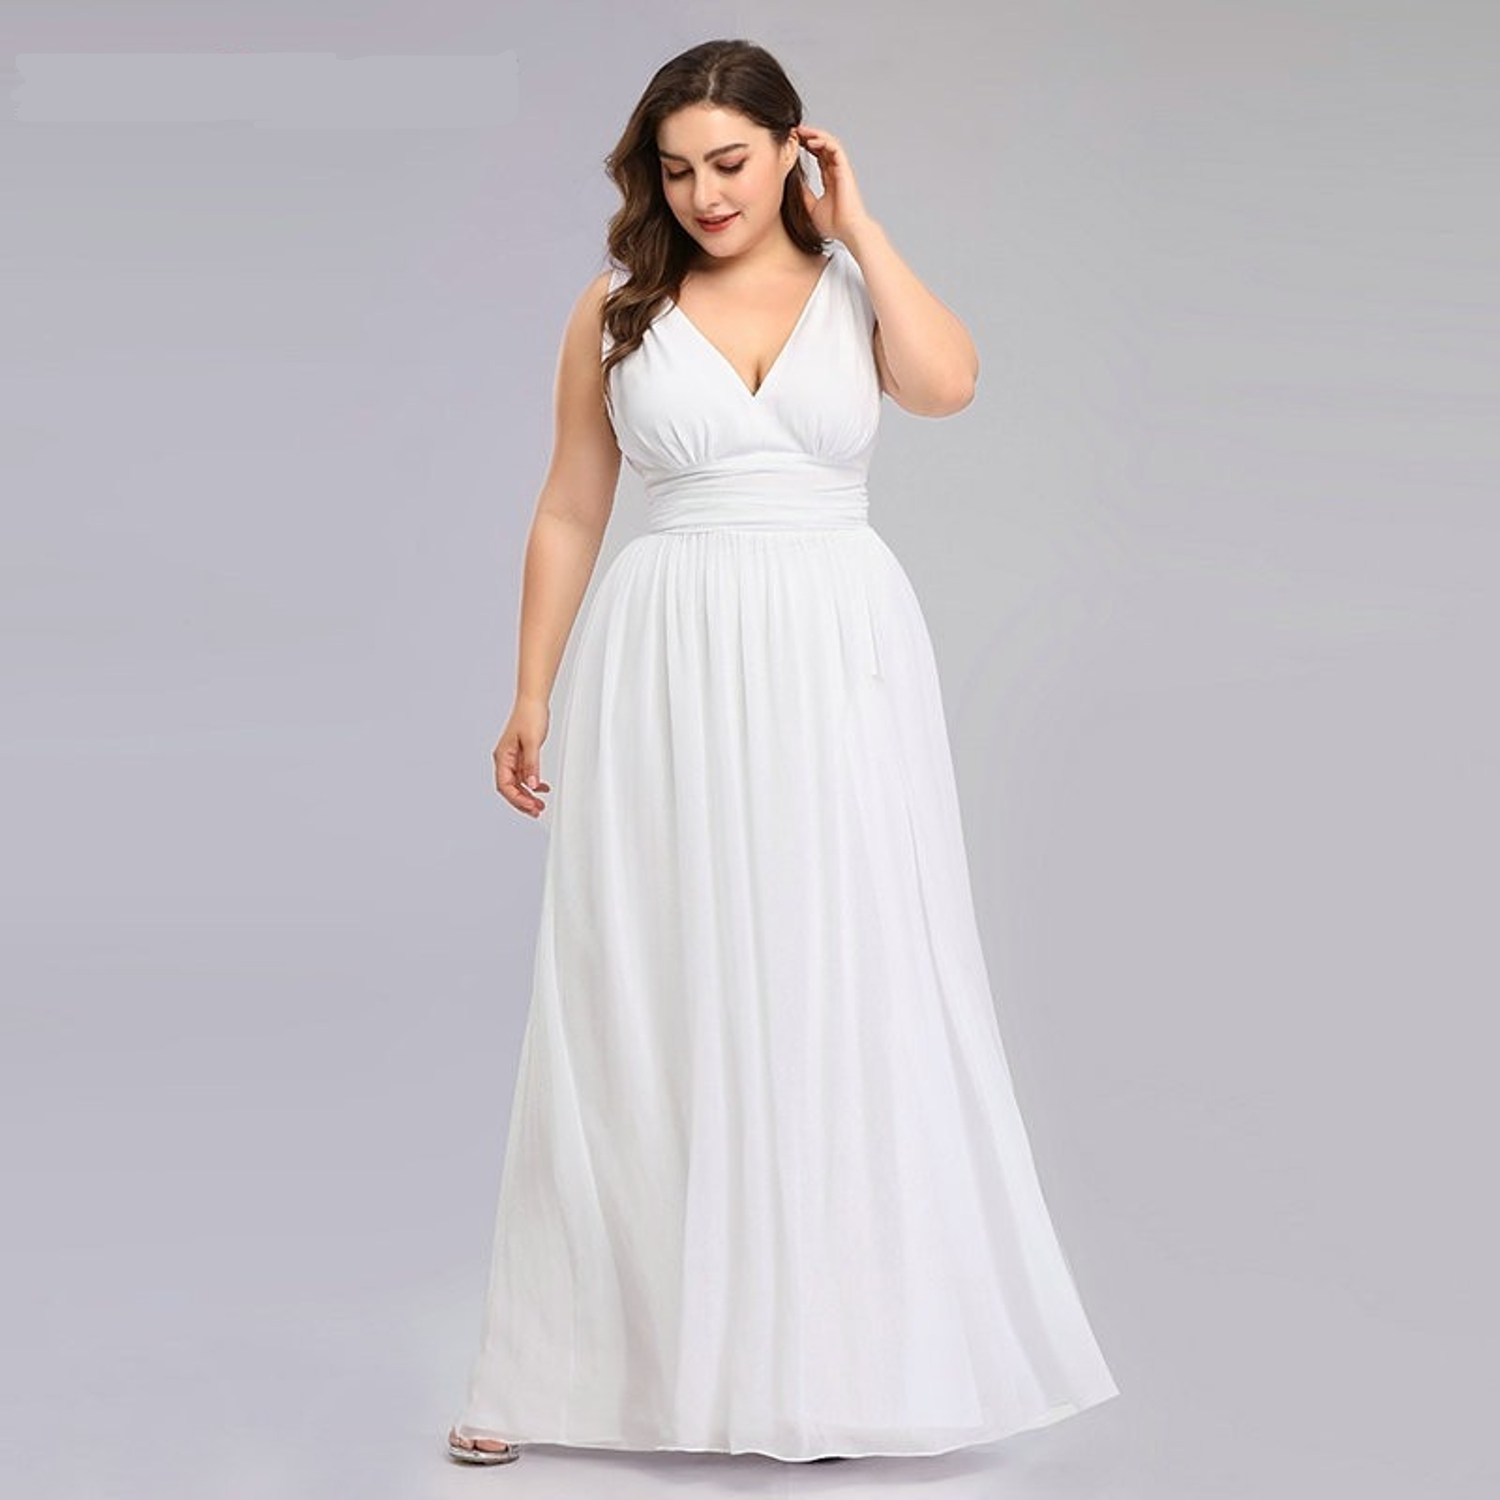 Plus-size A-line wedding dress